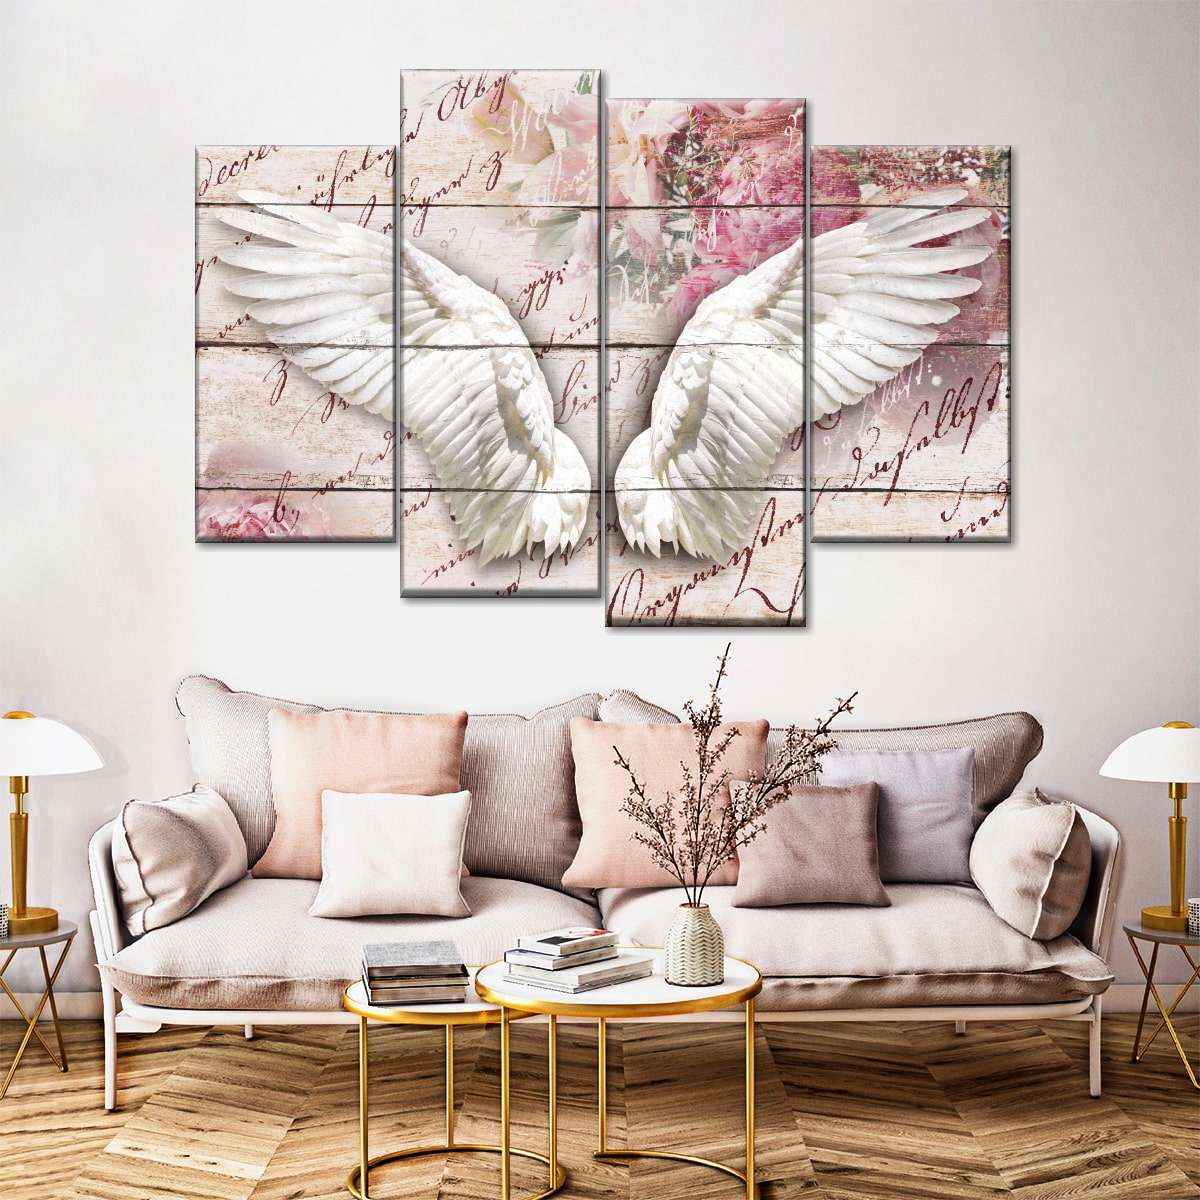 Living Room Wall Art  Paintings, Drawings & Photograph Art Prints